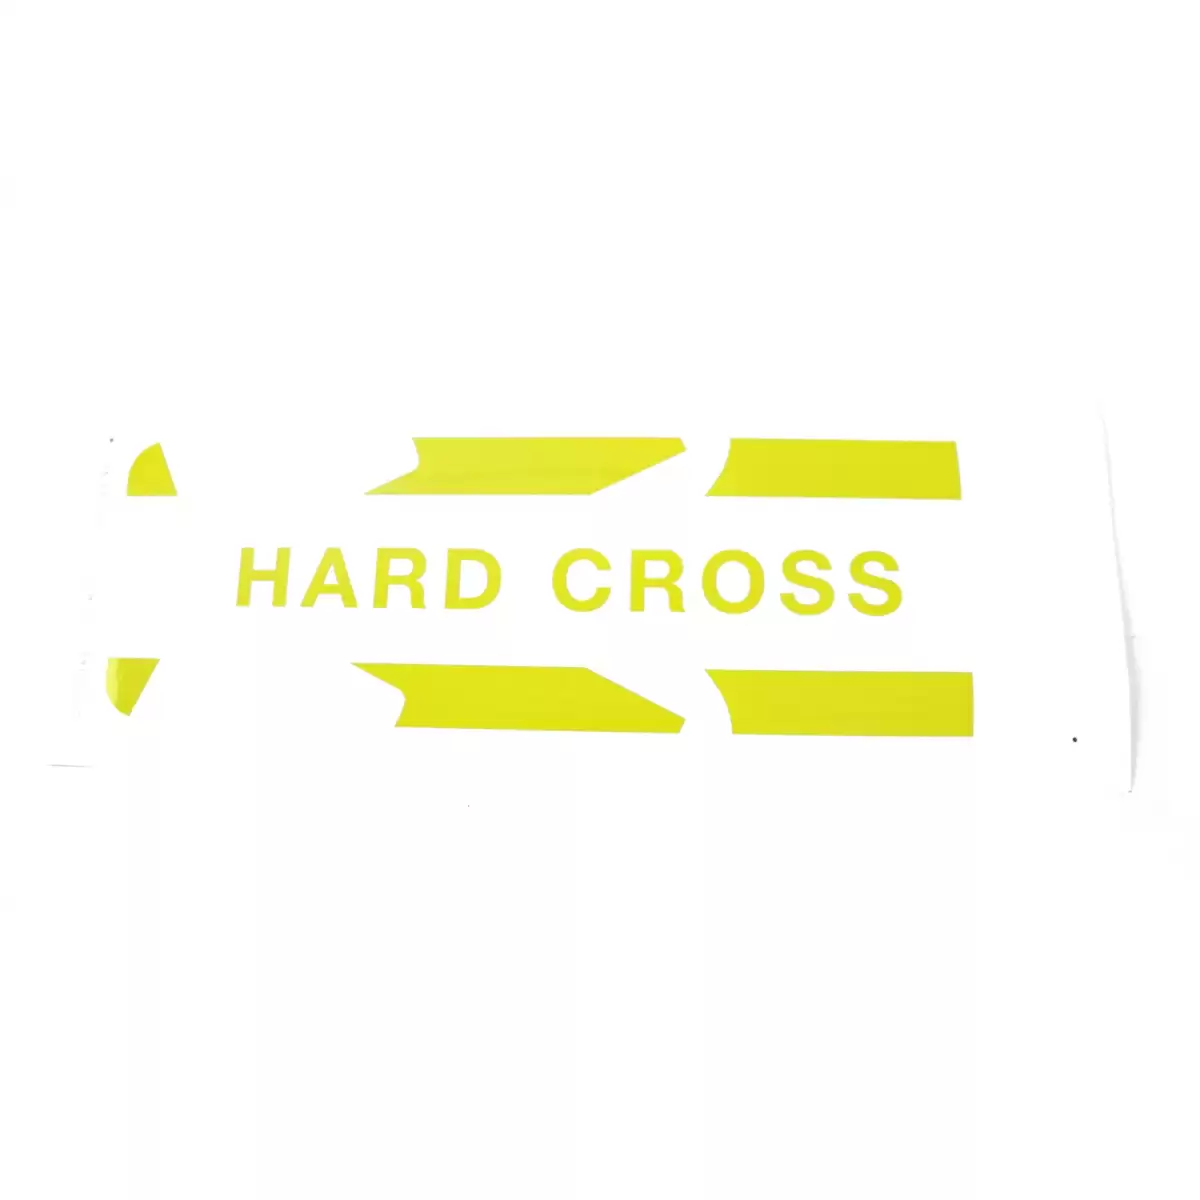 Sticker Battery Cover Hard Cross 7 Yellow - image